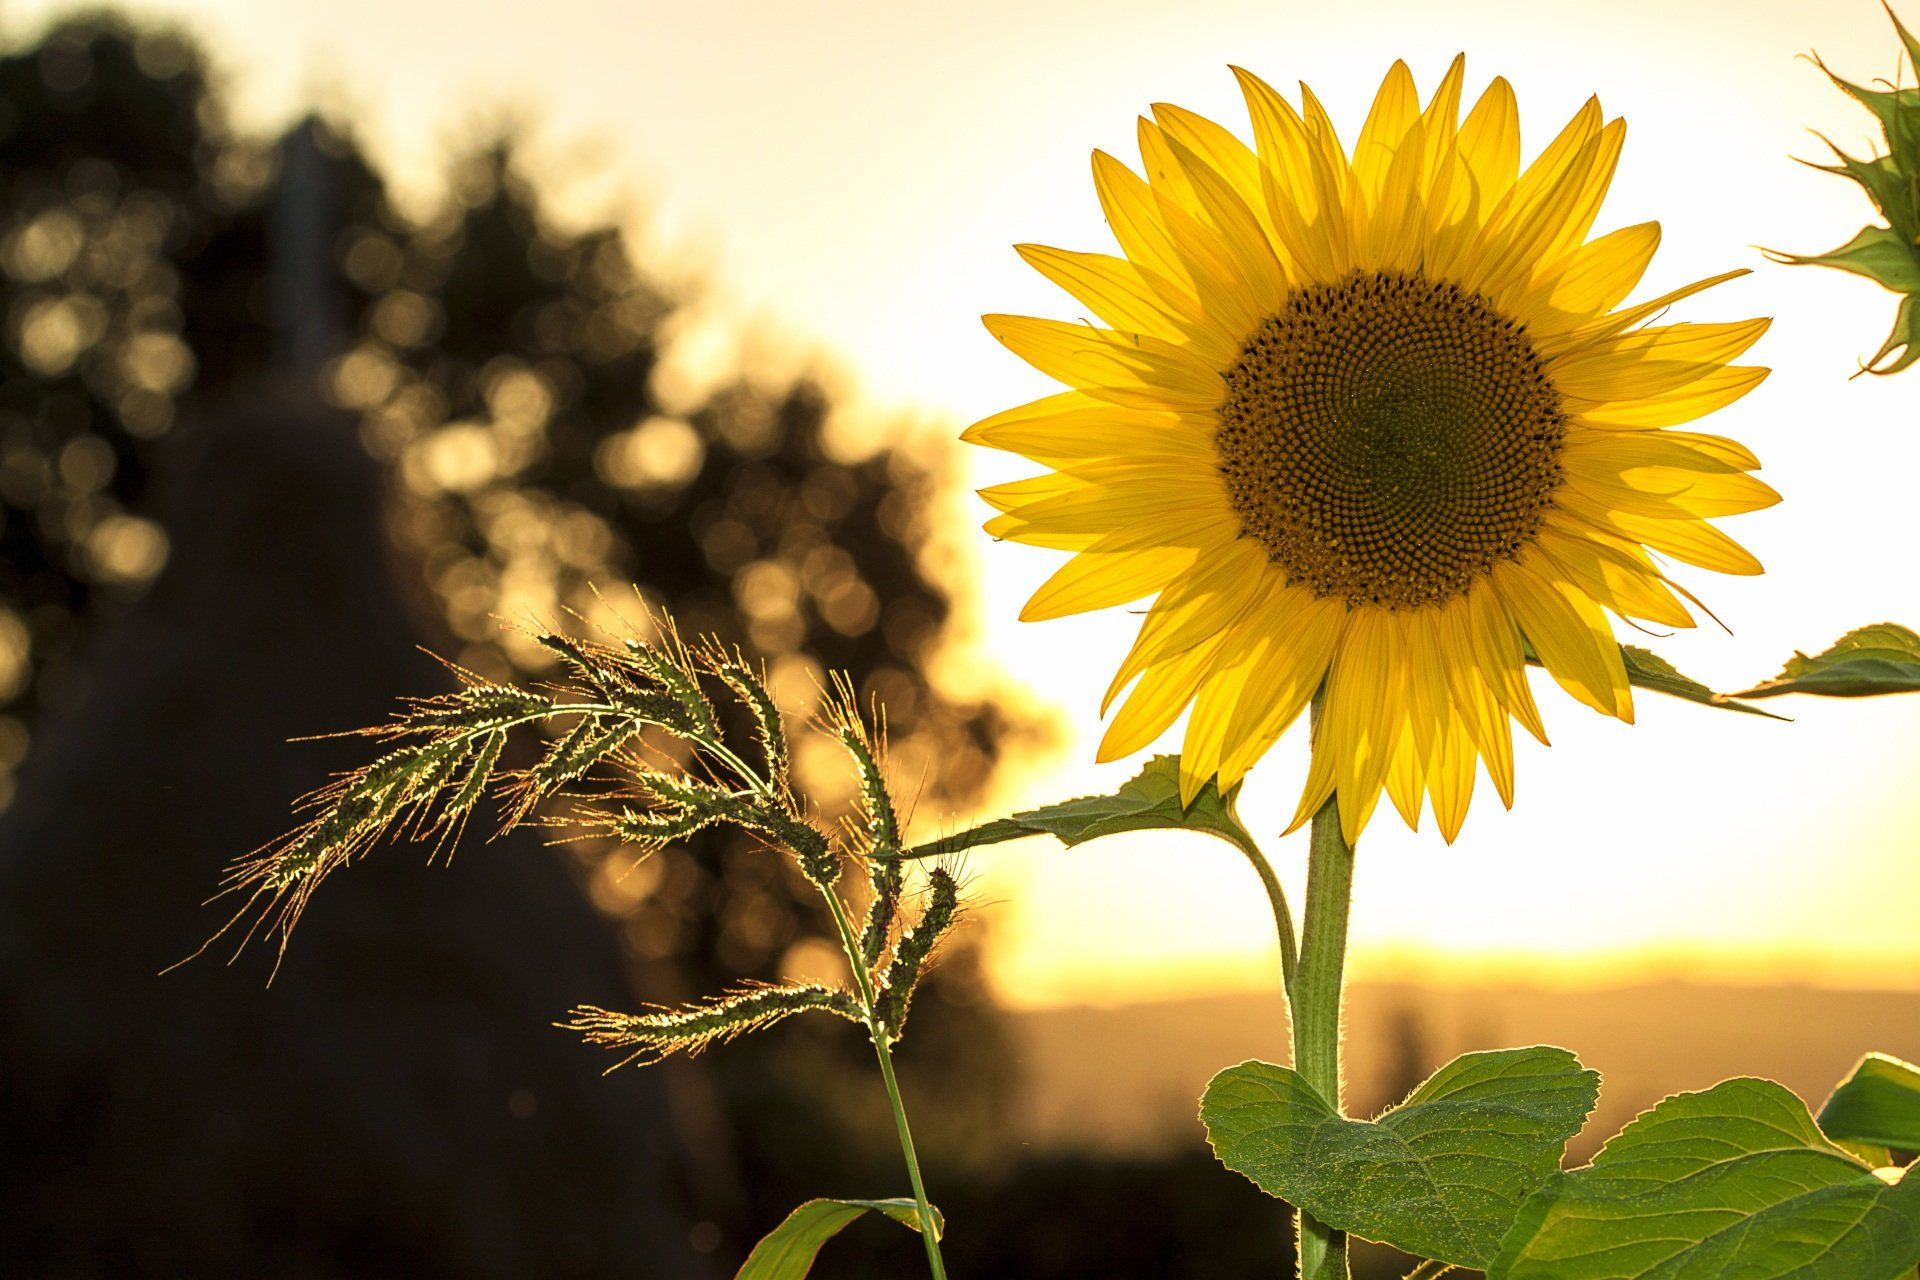 a sunflower stands during golden hour